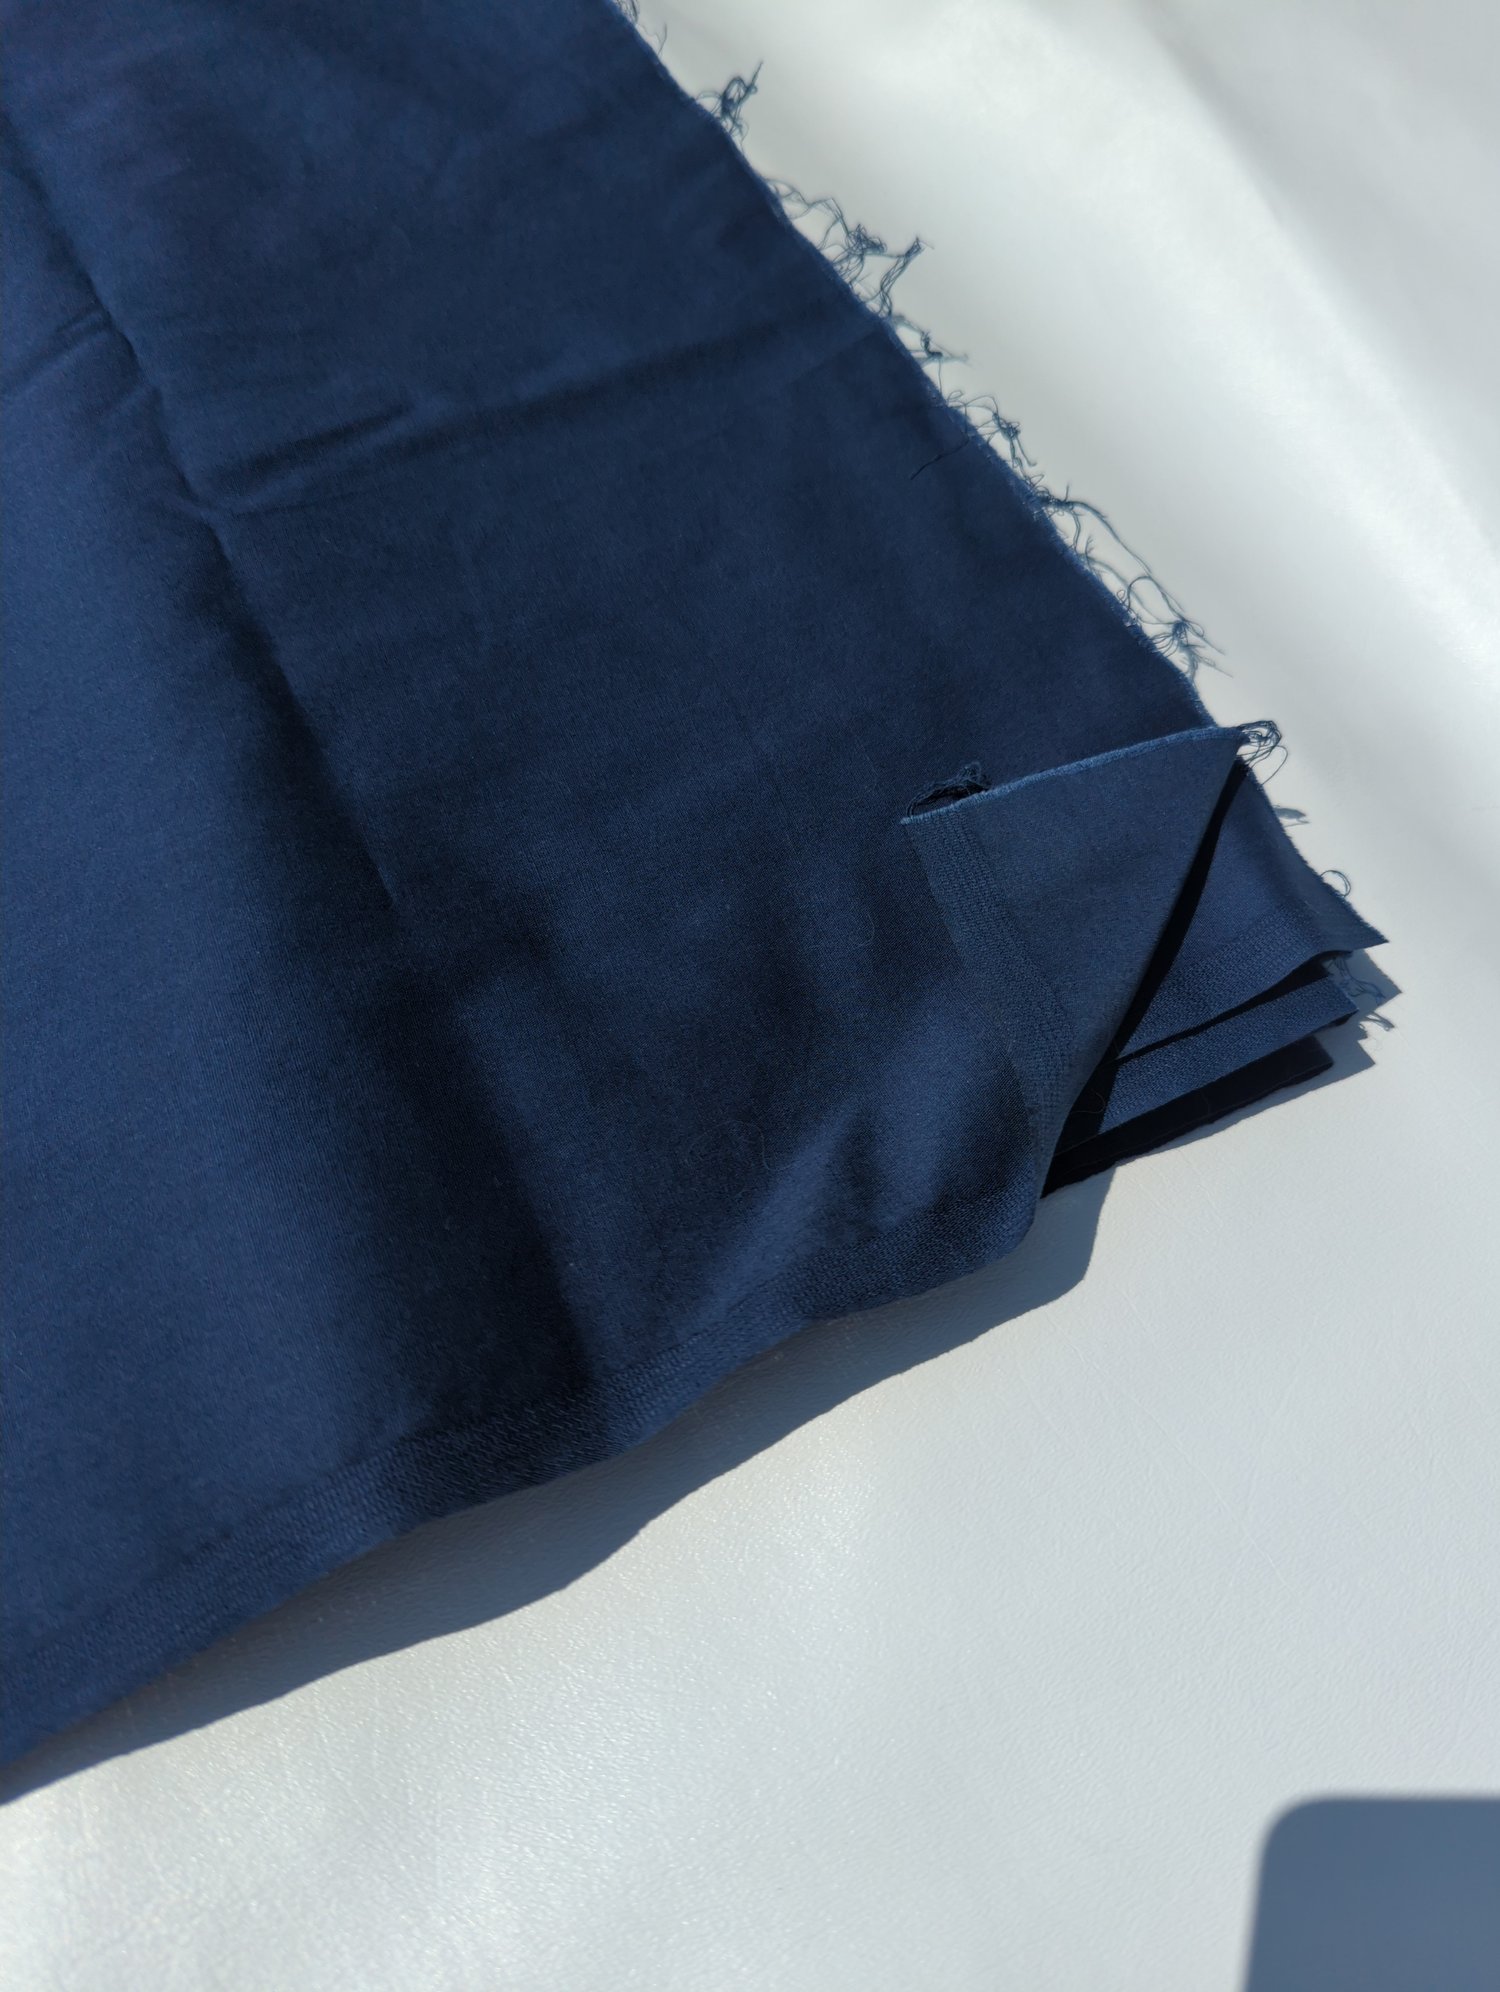 Linen precut fabric - navy blue - Fibra Creativa